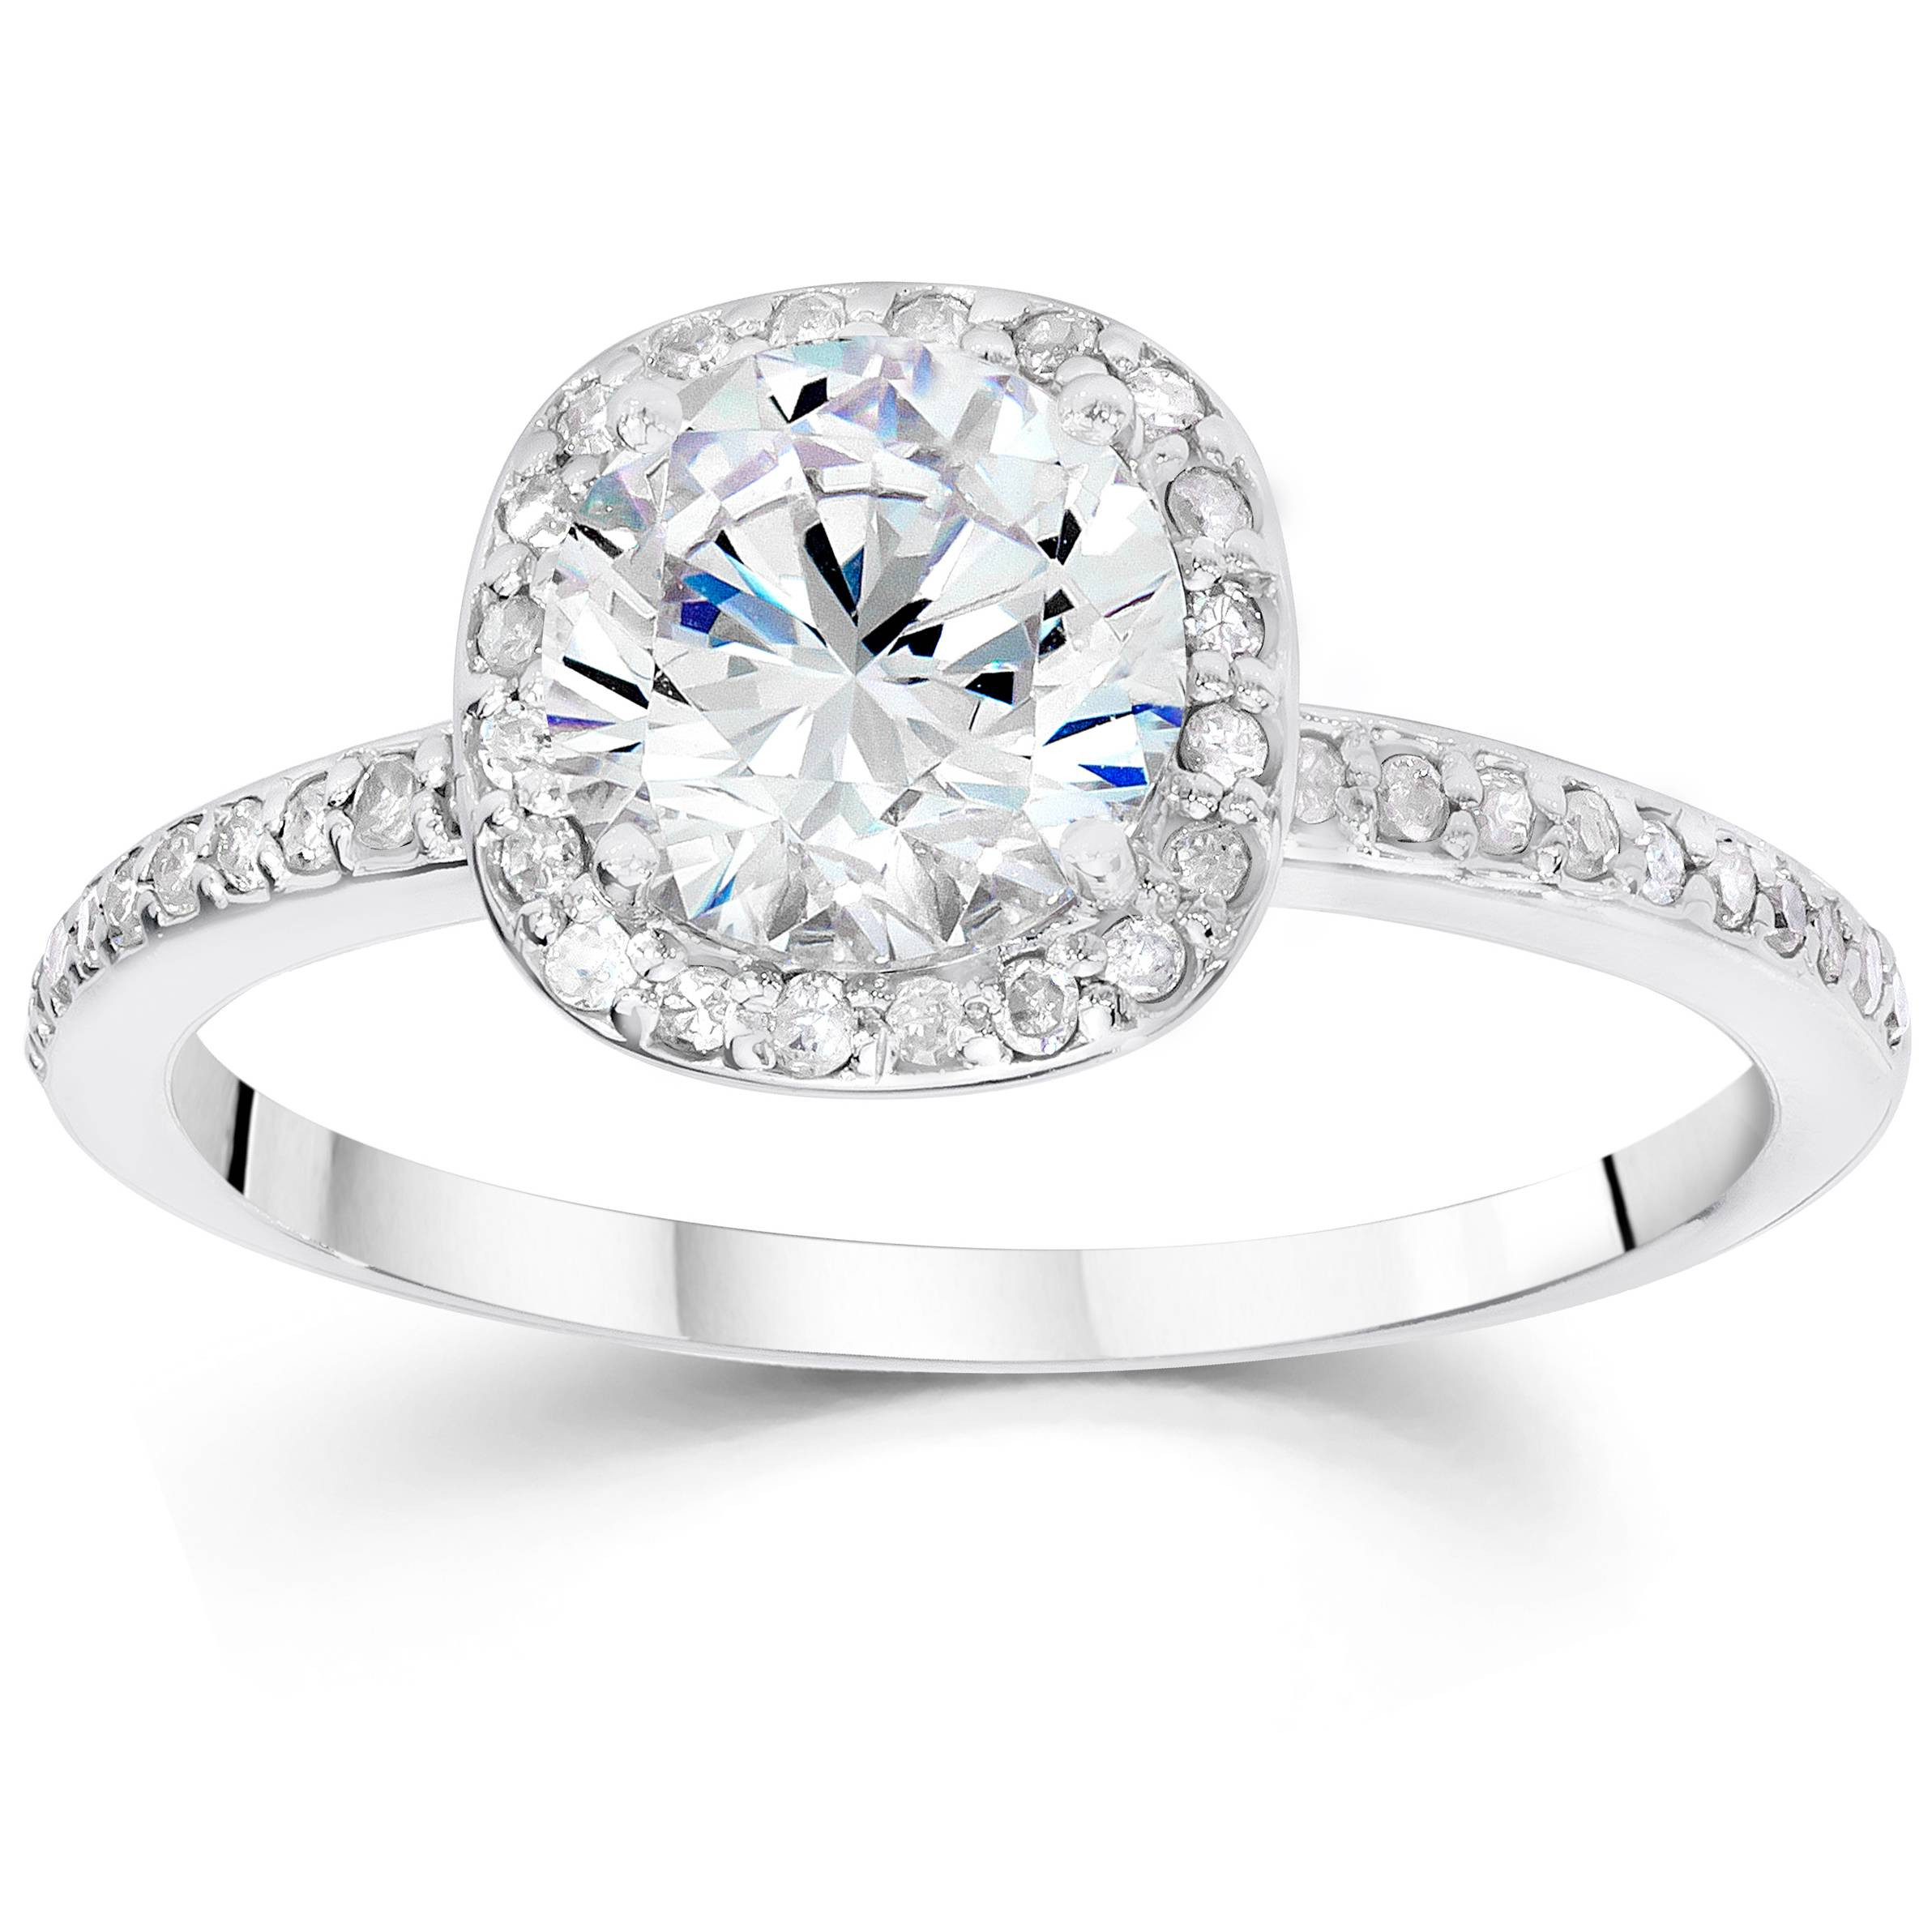 Cushion Cut Solitaire Diamond Engagement Rings
 5 8ct Cushion Halo Diamond Engagement Ring 14K White Gold